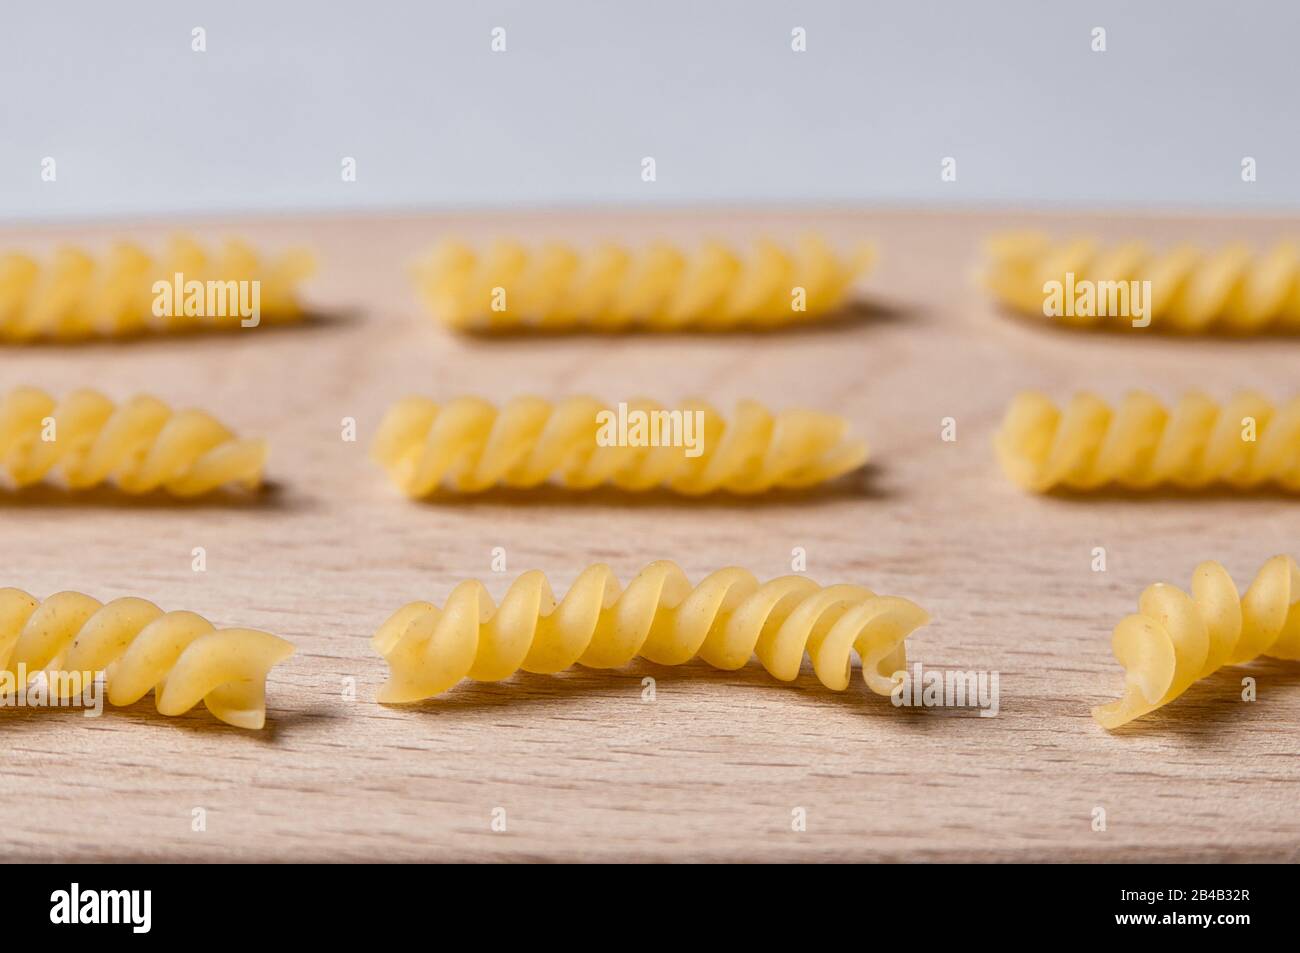 Pasta girandole types in wooden background. Italian noodles close up Stock Photo